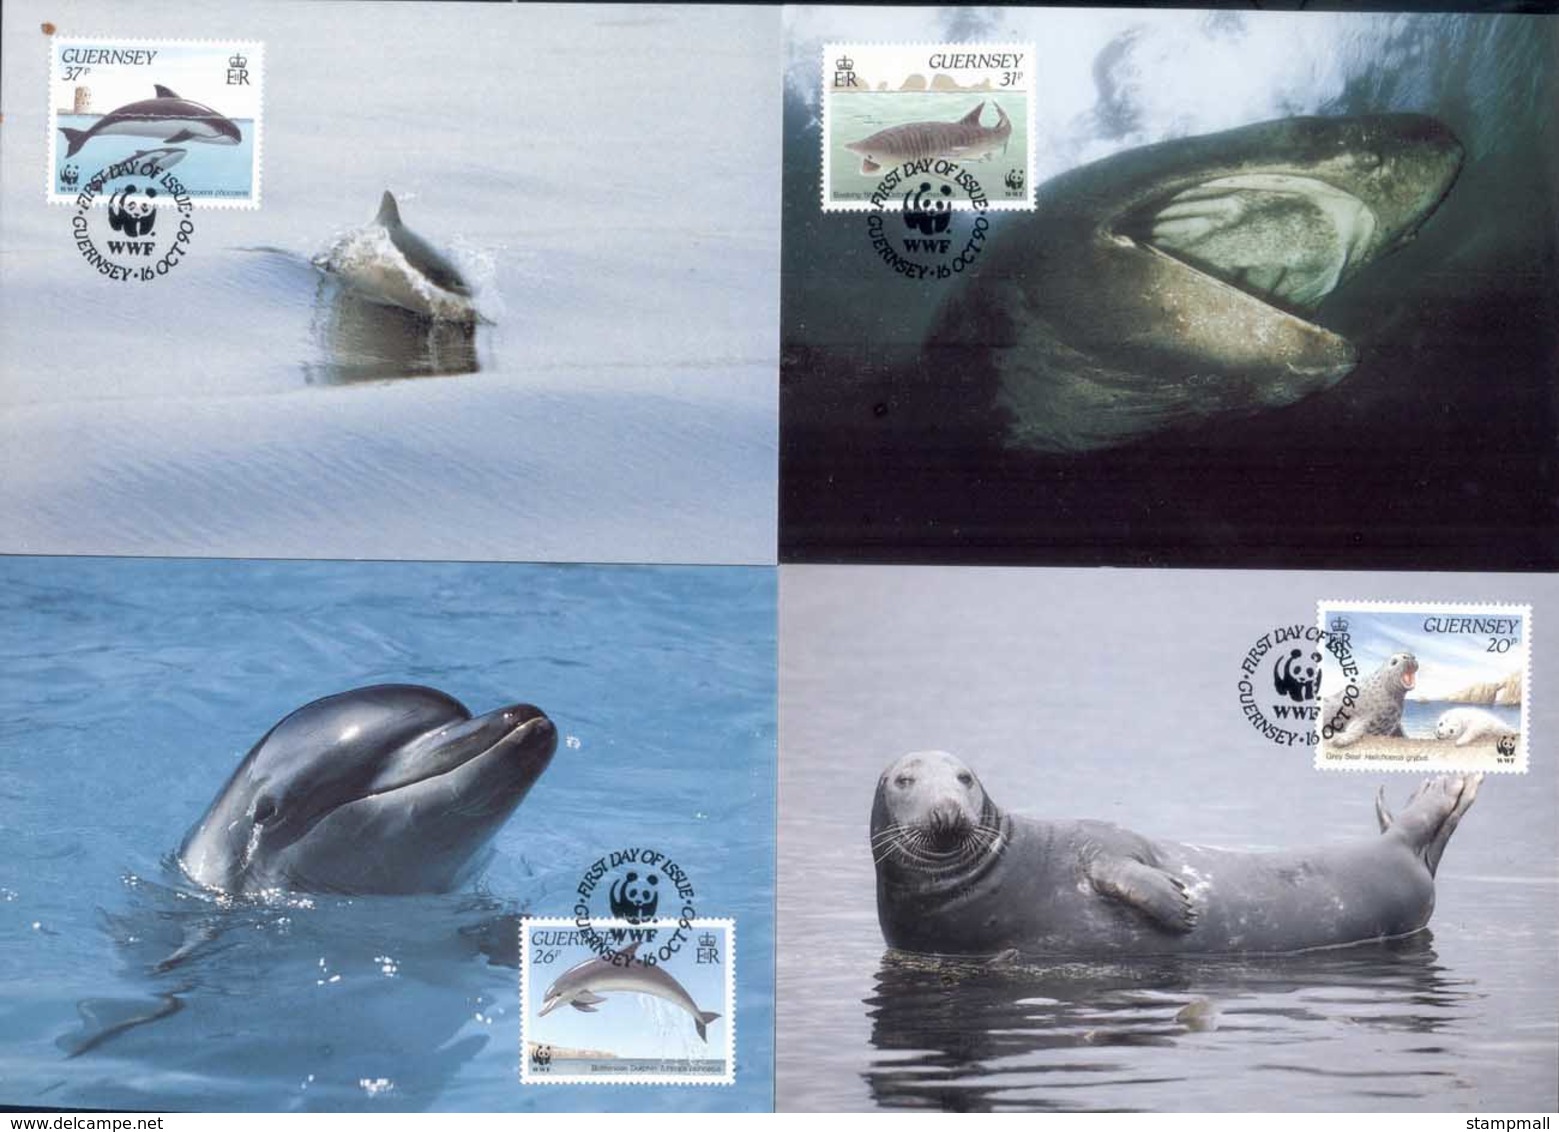 Guernsey 1990 WWF Guernsey Sea Life, Seal, Whale Maxicards - Guernesey